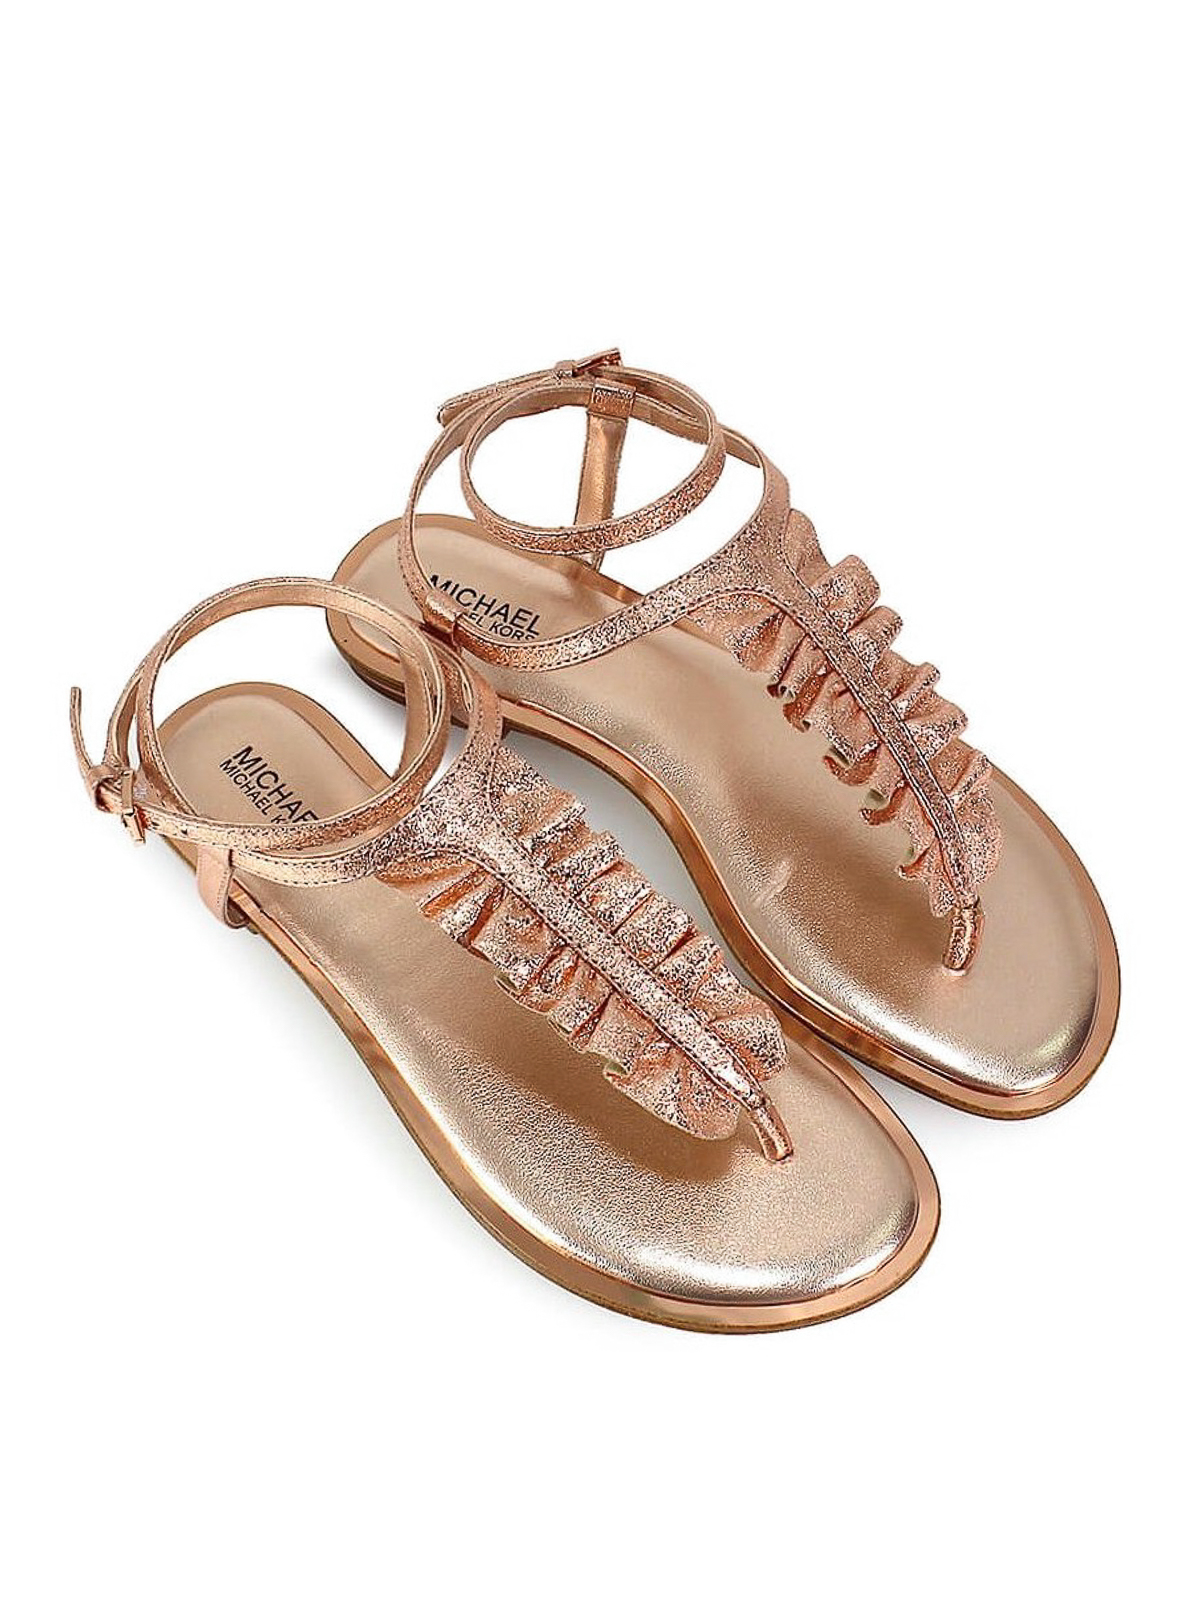 top Eed Aubergine Sandals Michael Kors - Bella rose gold thong sandals - 40S8BLFA3M187